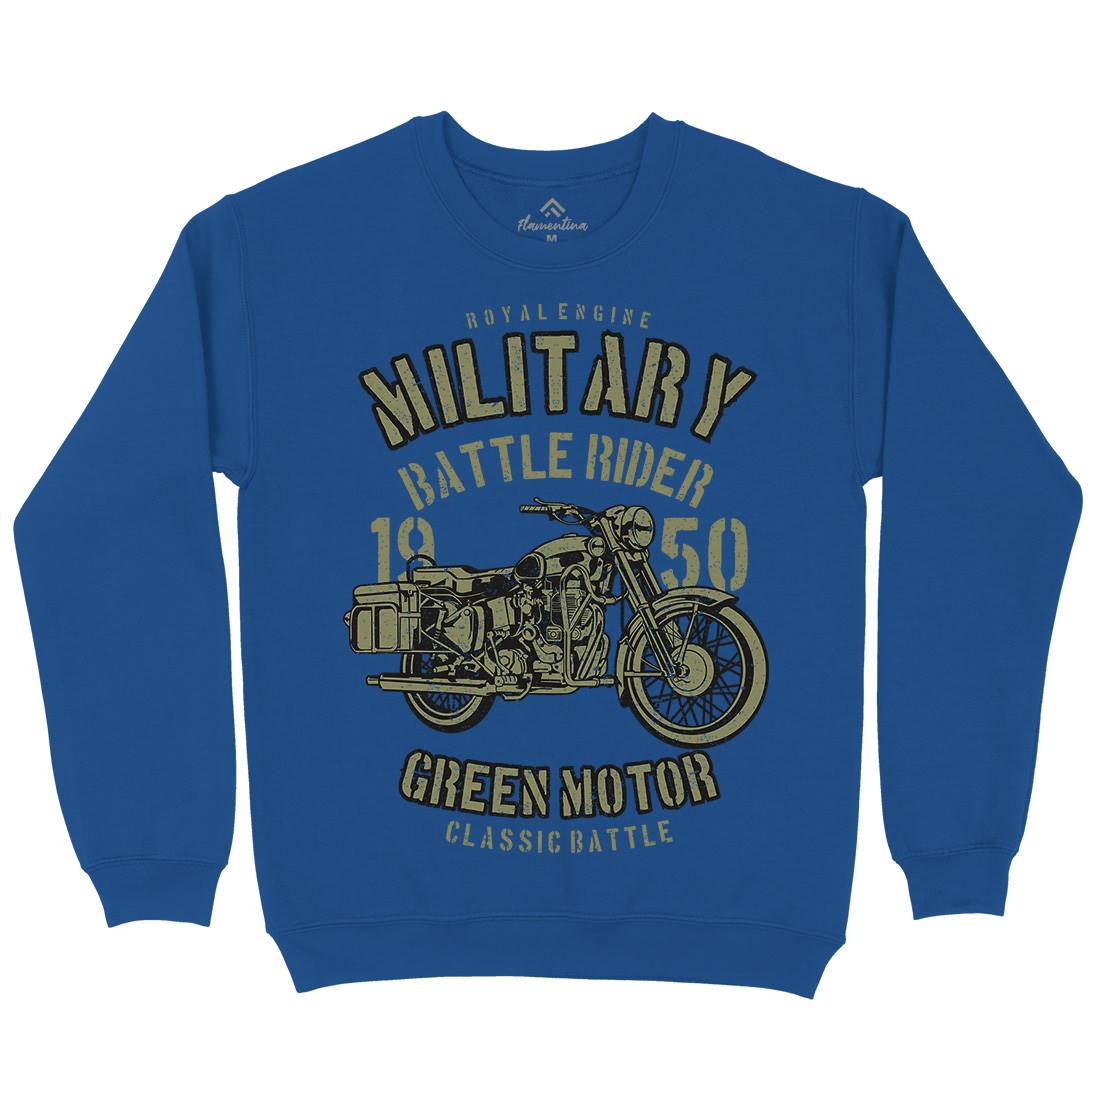 Green Military Ride Kids Crew Neck Sweatshirt Army A678